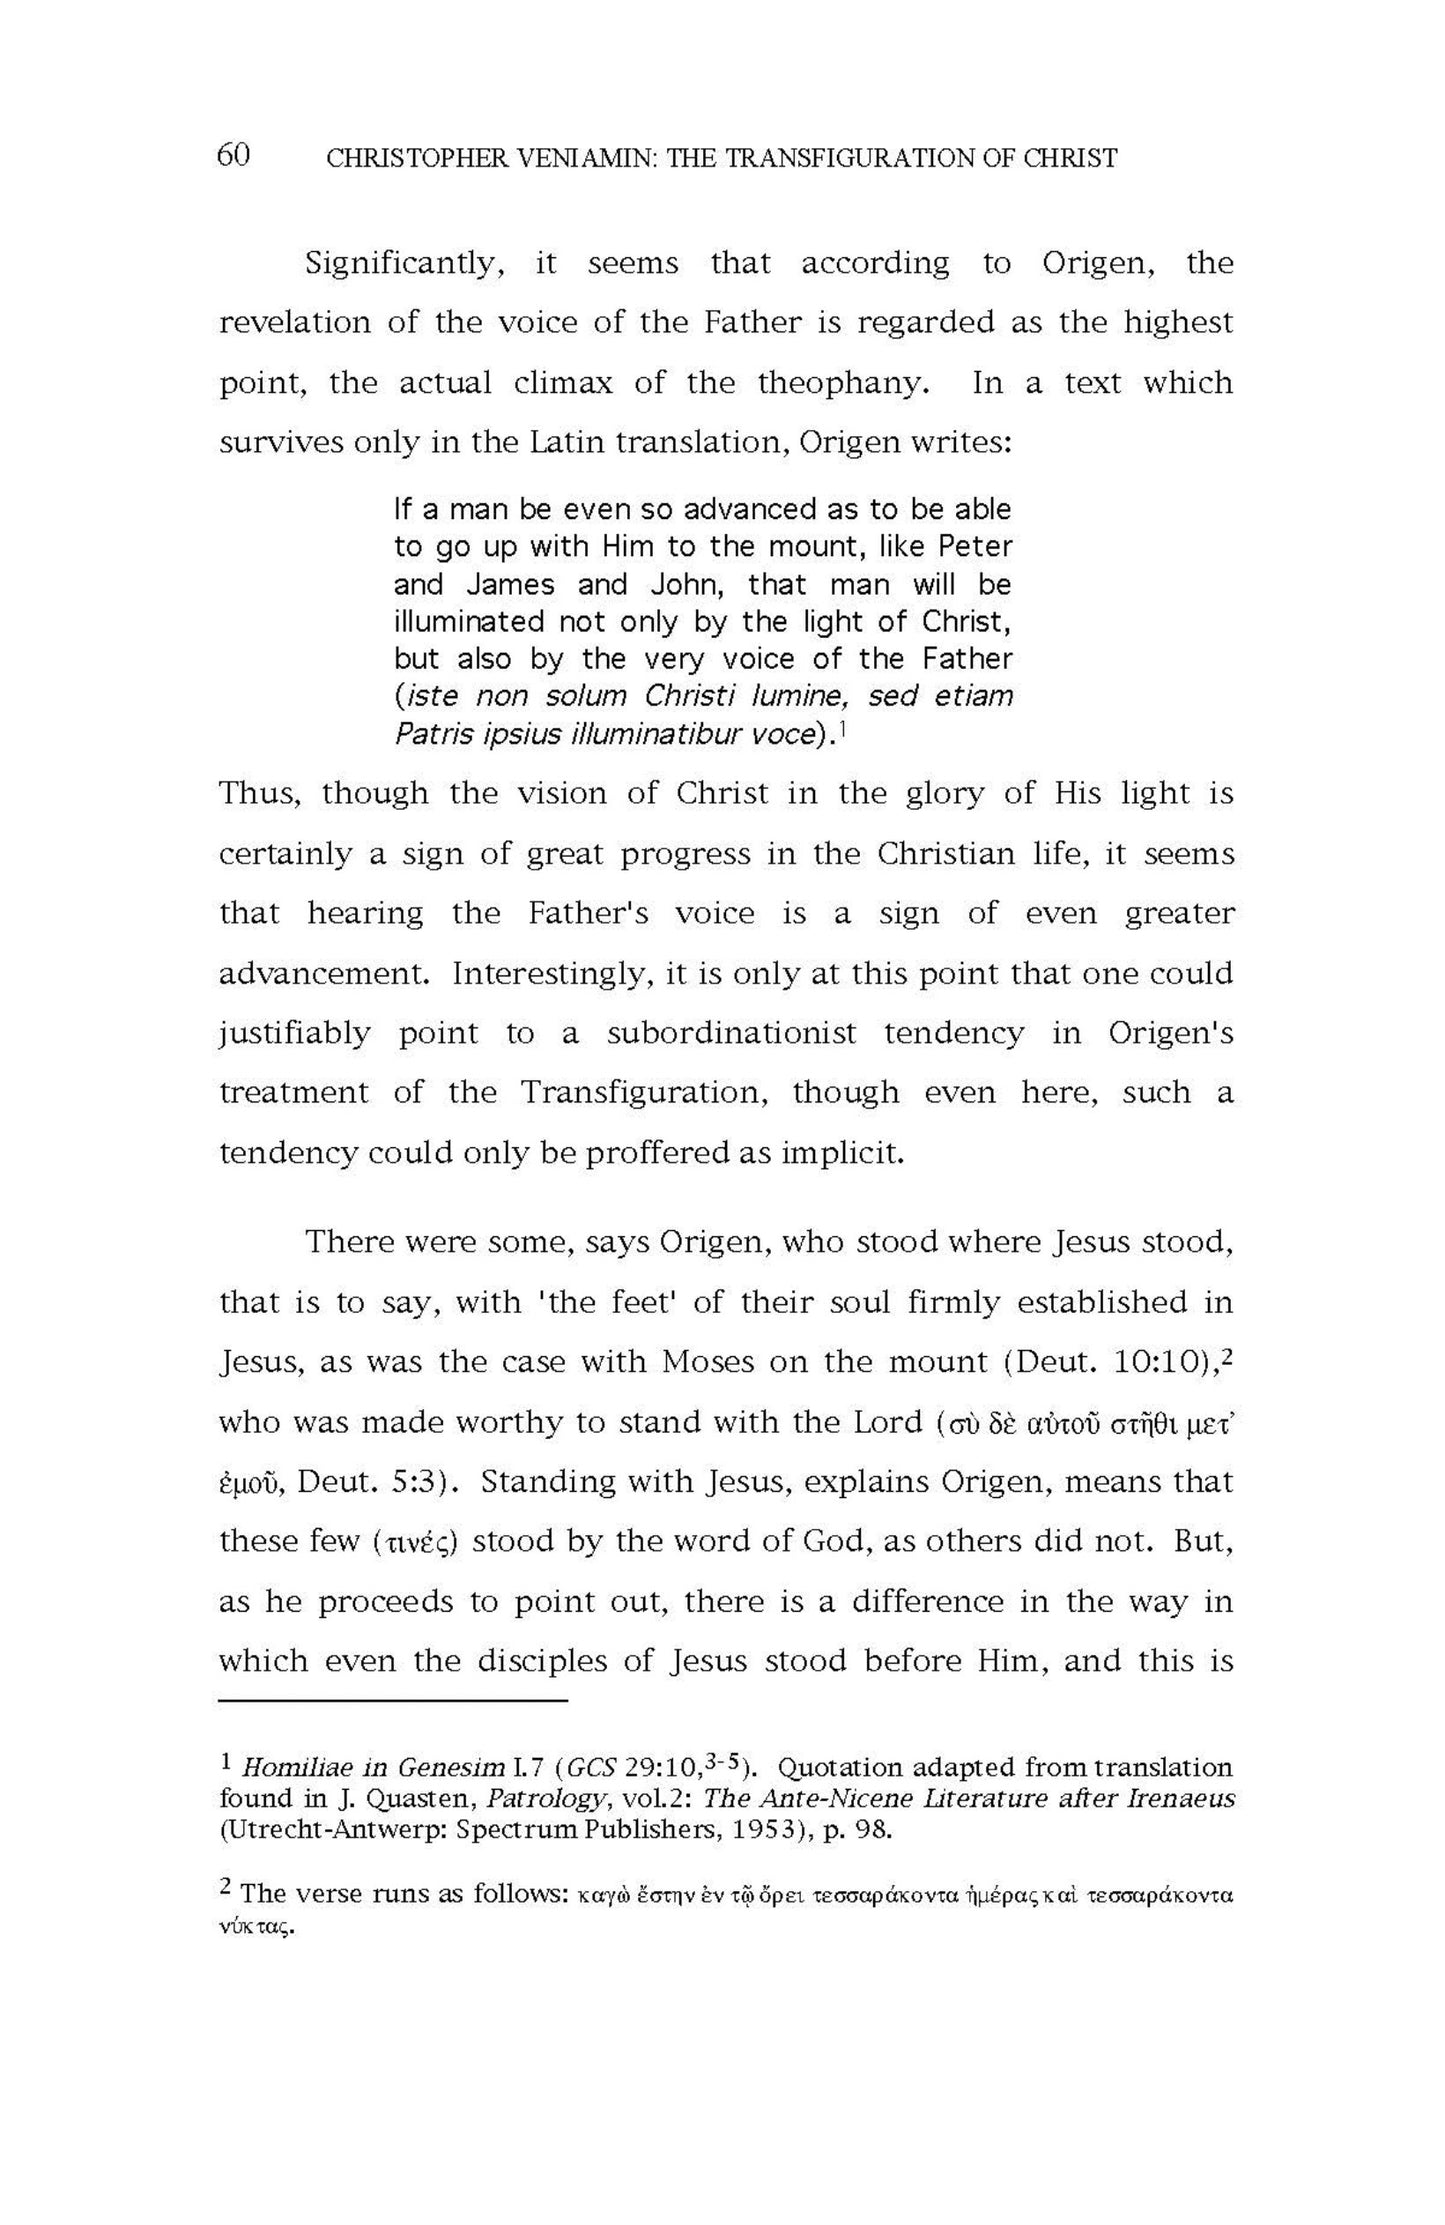 The Transfiguration of Christ in Greek Patristic Literature, by C. Veniamin